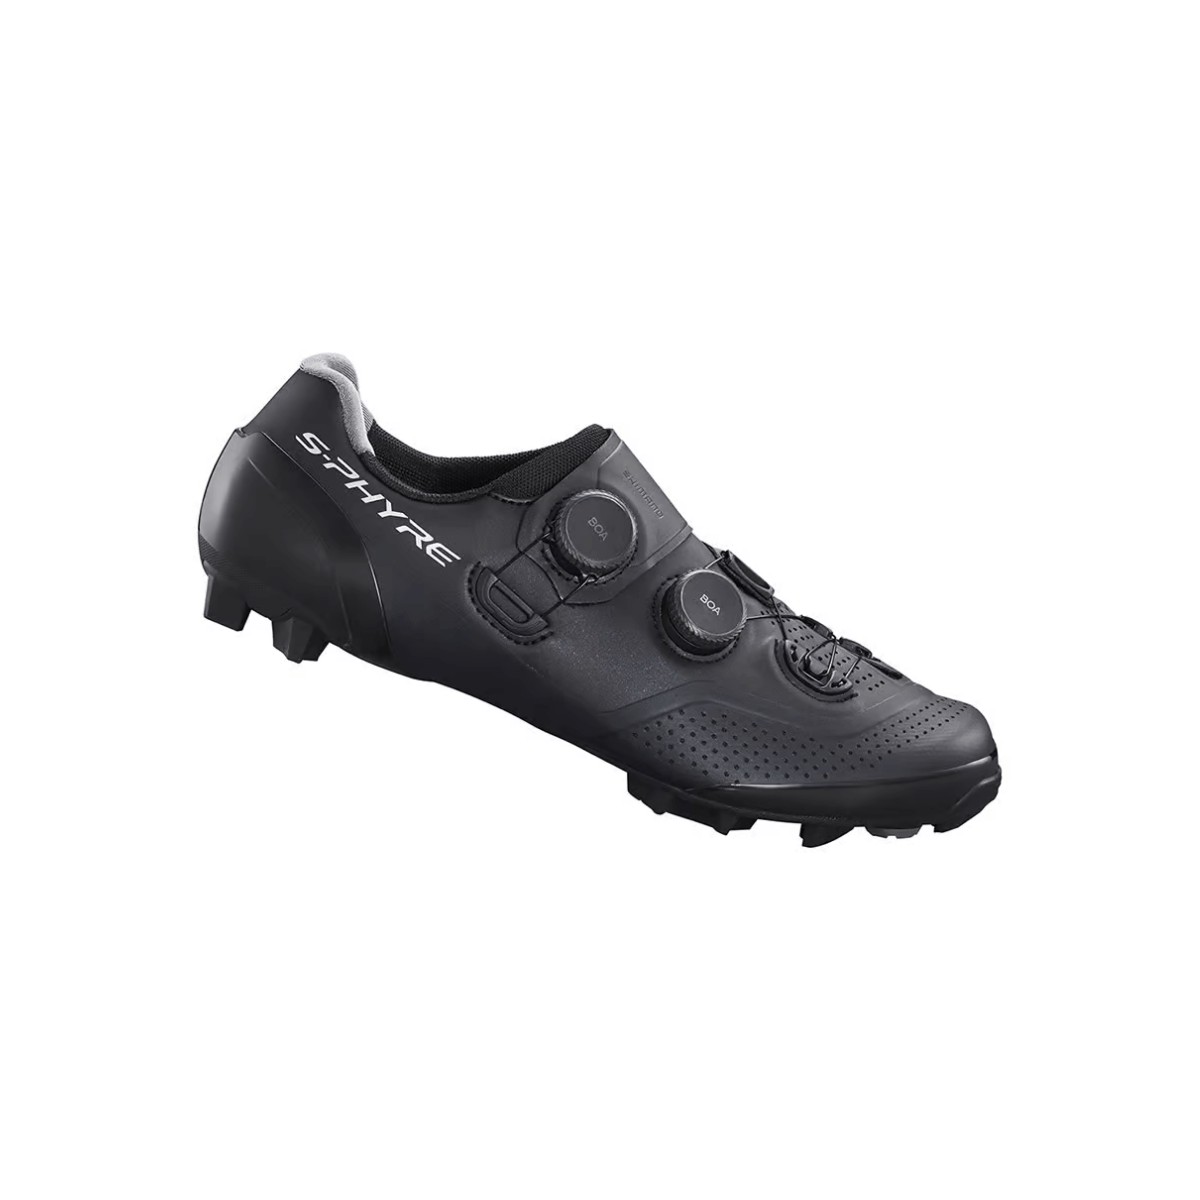 Photos - Cycling Shoes Shimano XC902 MTB Shoes Black, Size 43,5 - EUR ESHXC902MCL01S-435 